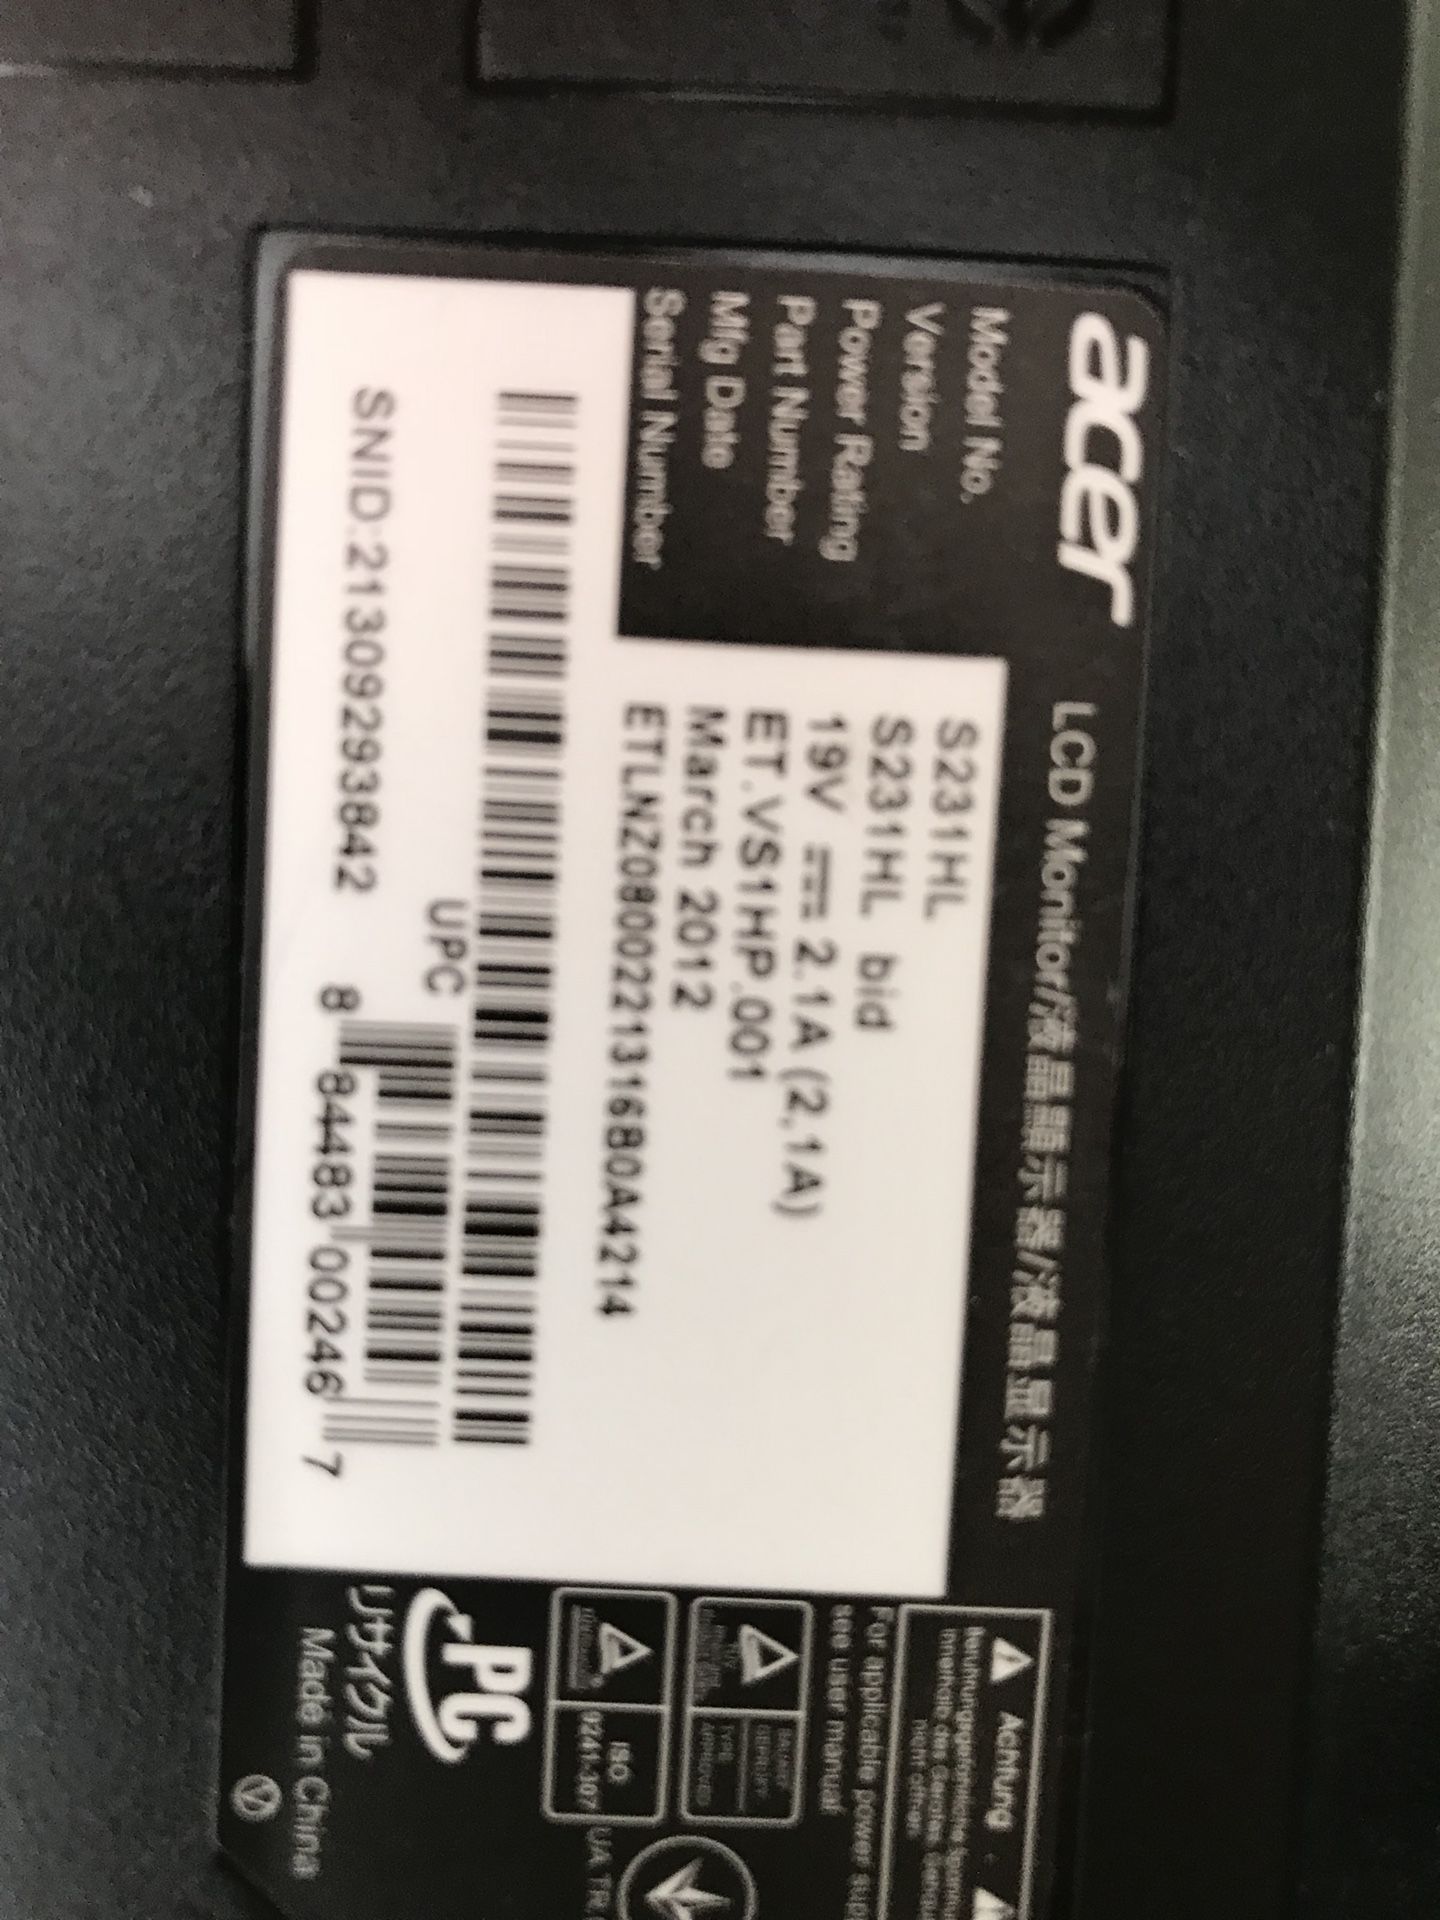 360hz monitor Acer Predator for Sale in Rancho Suey, CA - OfferUp